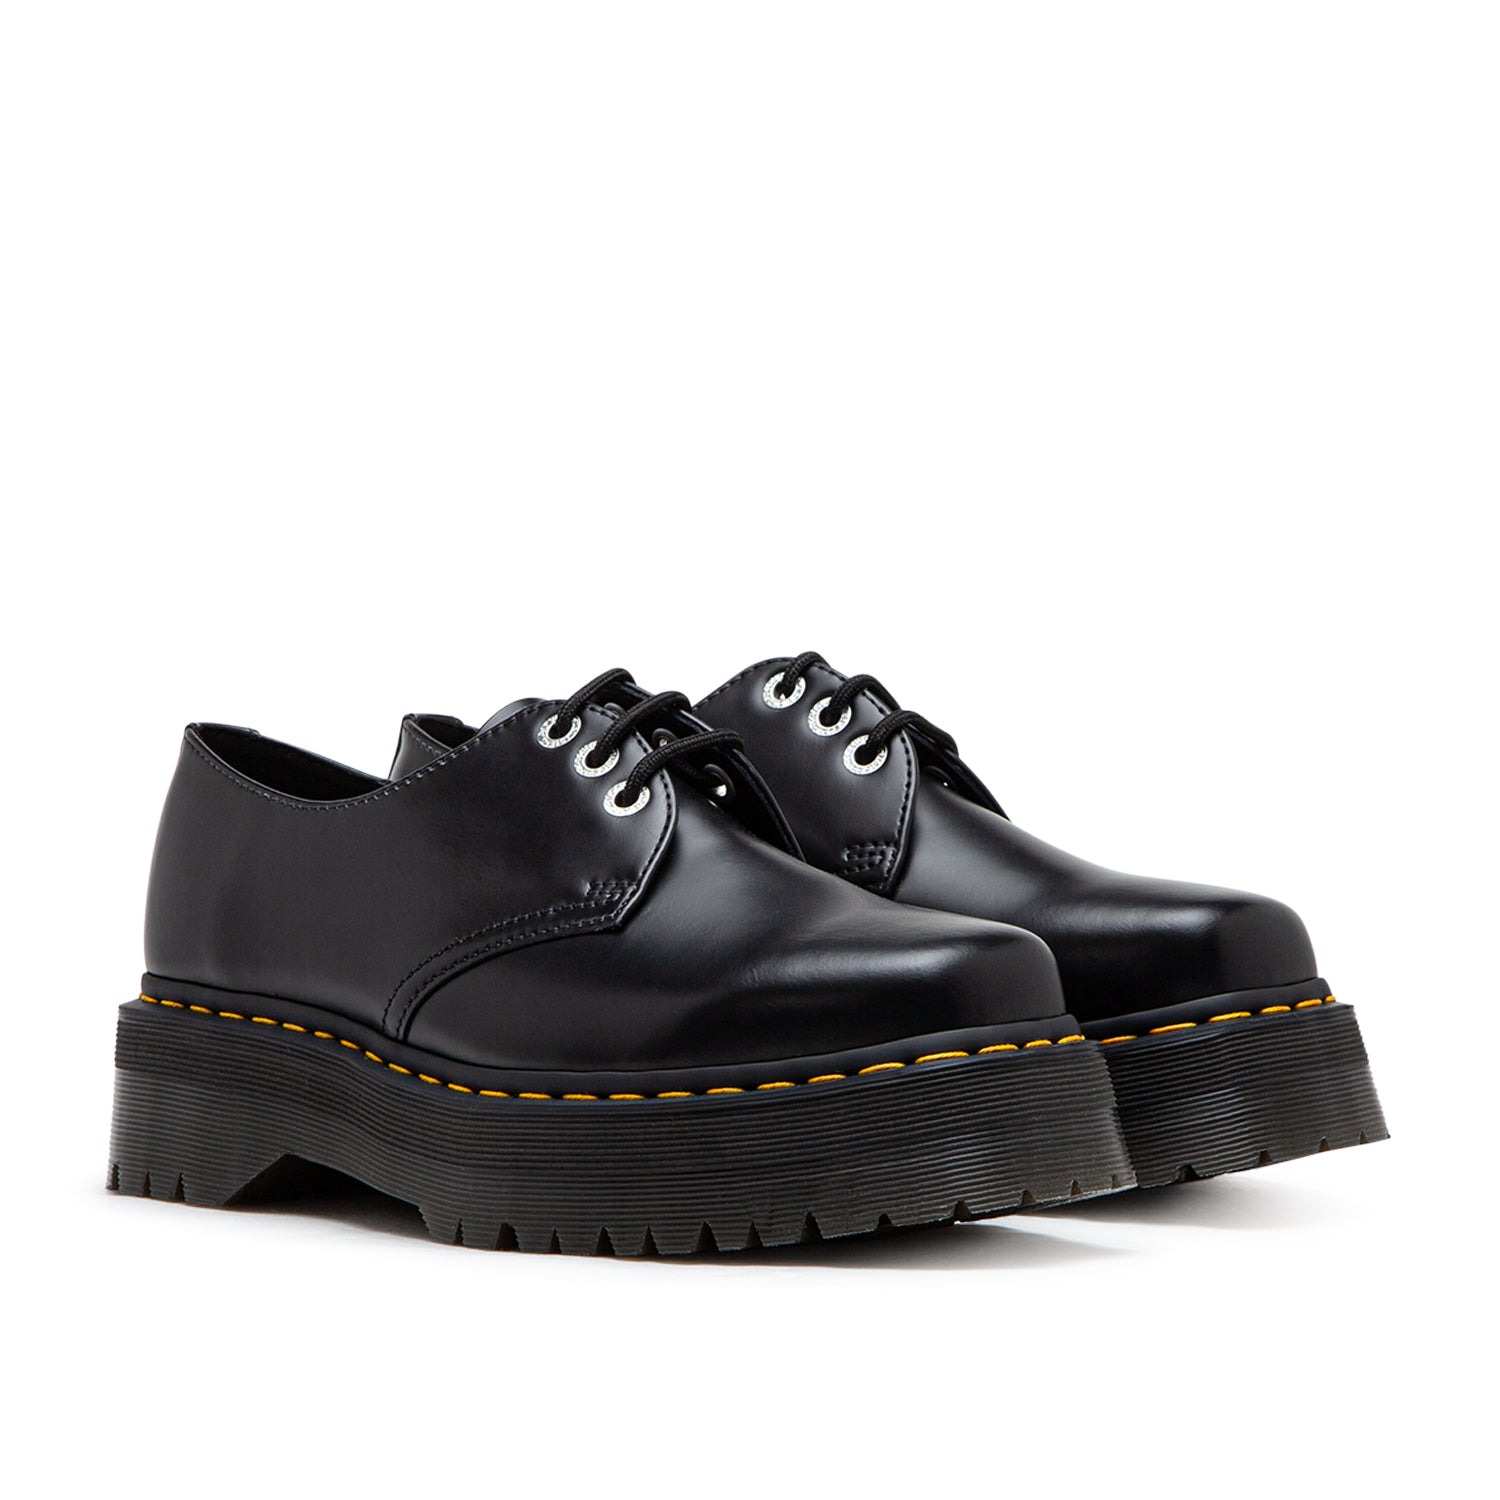 Dr. Martens 1461 Quad Squared Toe Leather Shoes (Schwarz)  - Allike Store